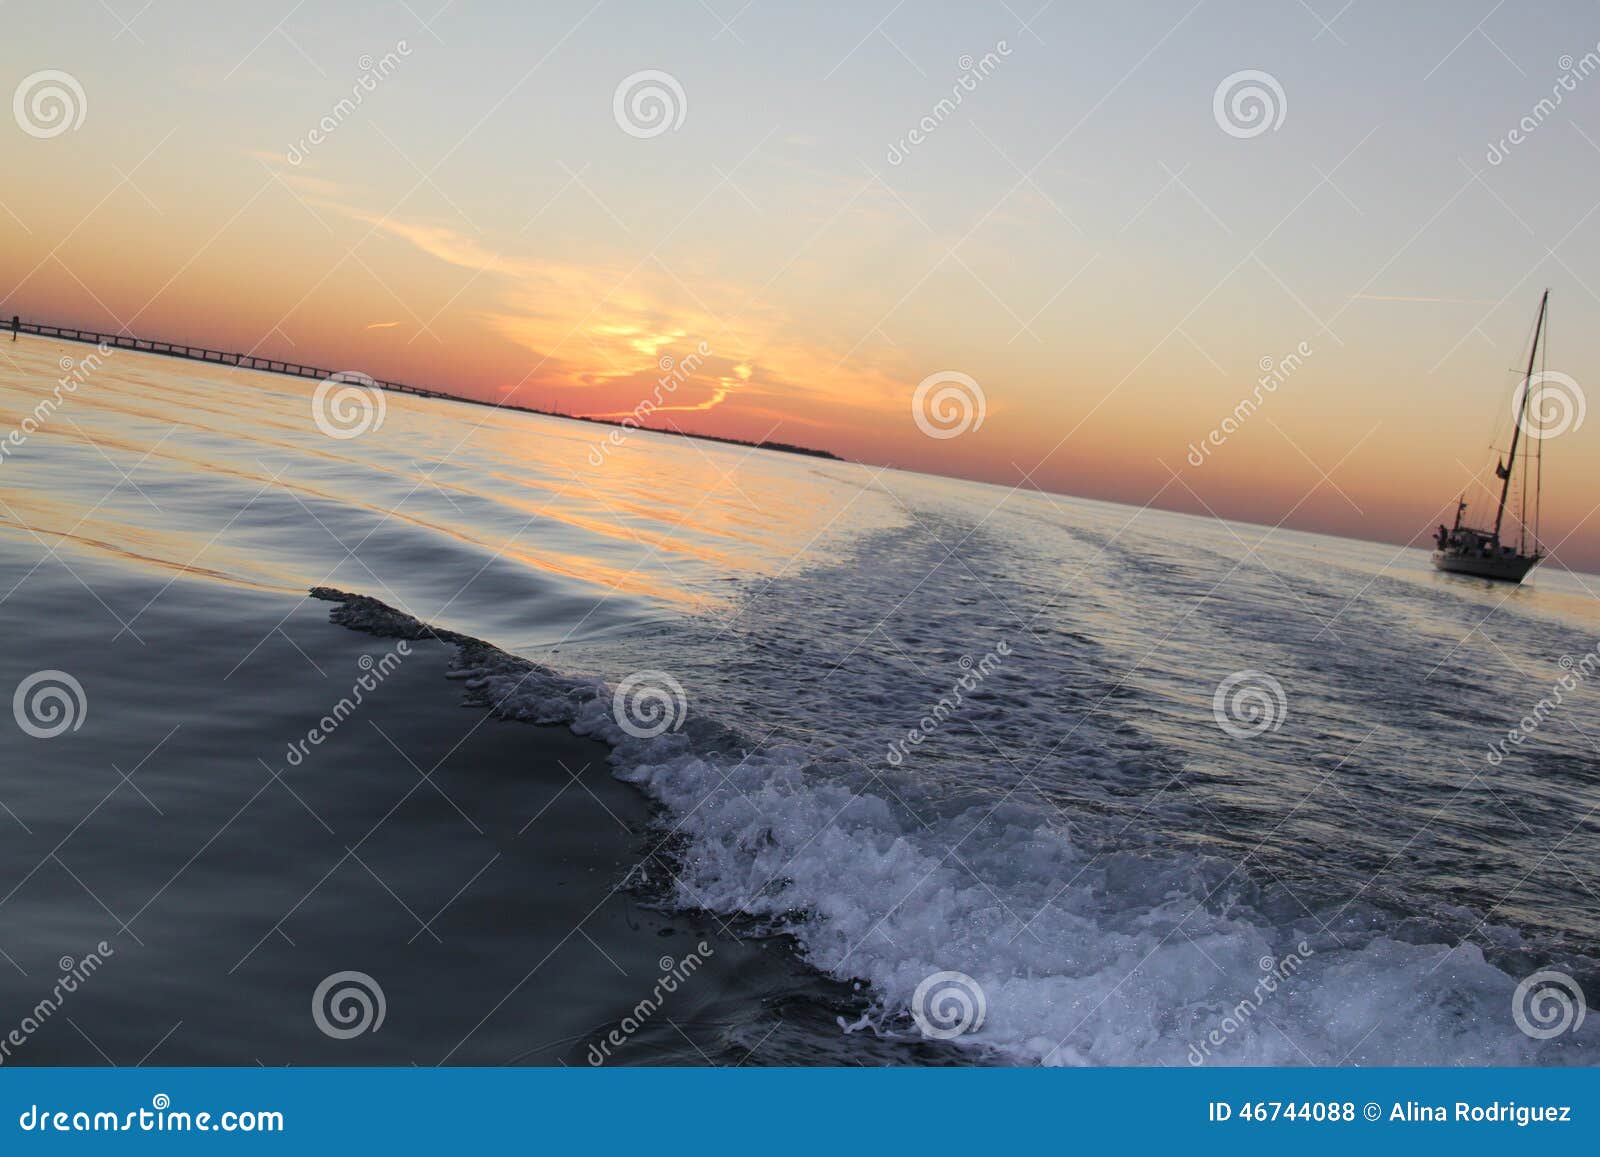 islamorada, florida sunset fishing